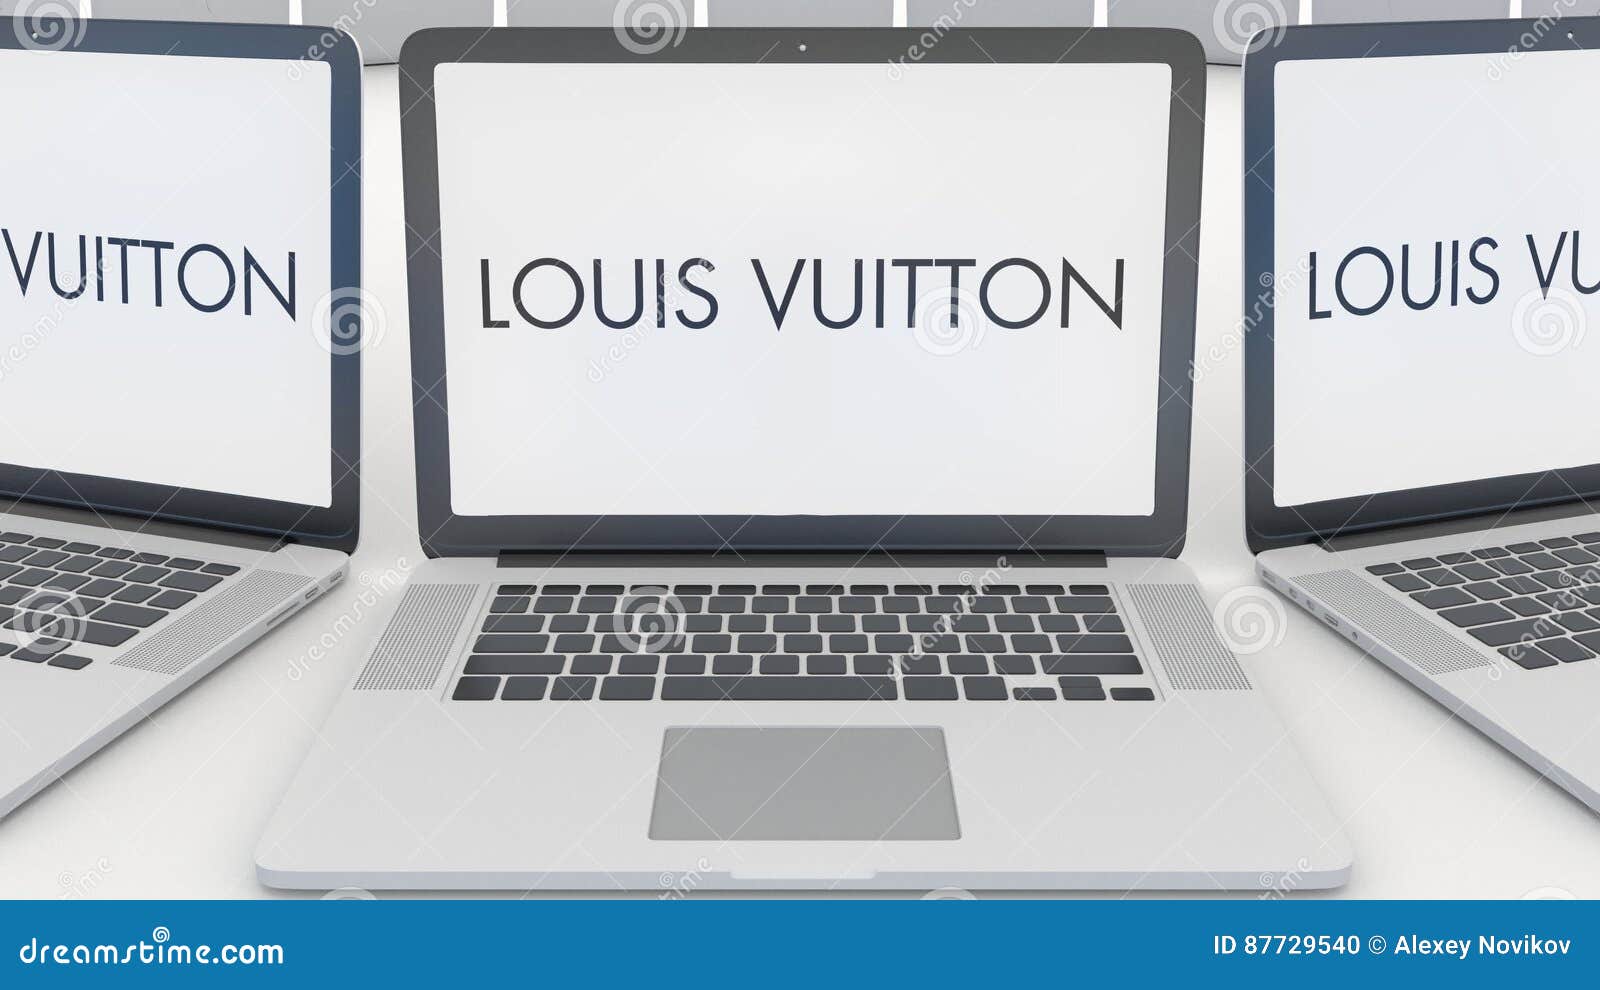 Louis Vuitton Technology  Natural Resource Department